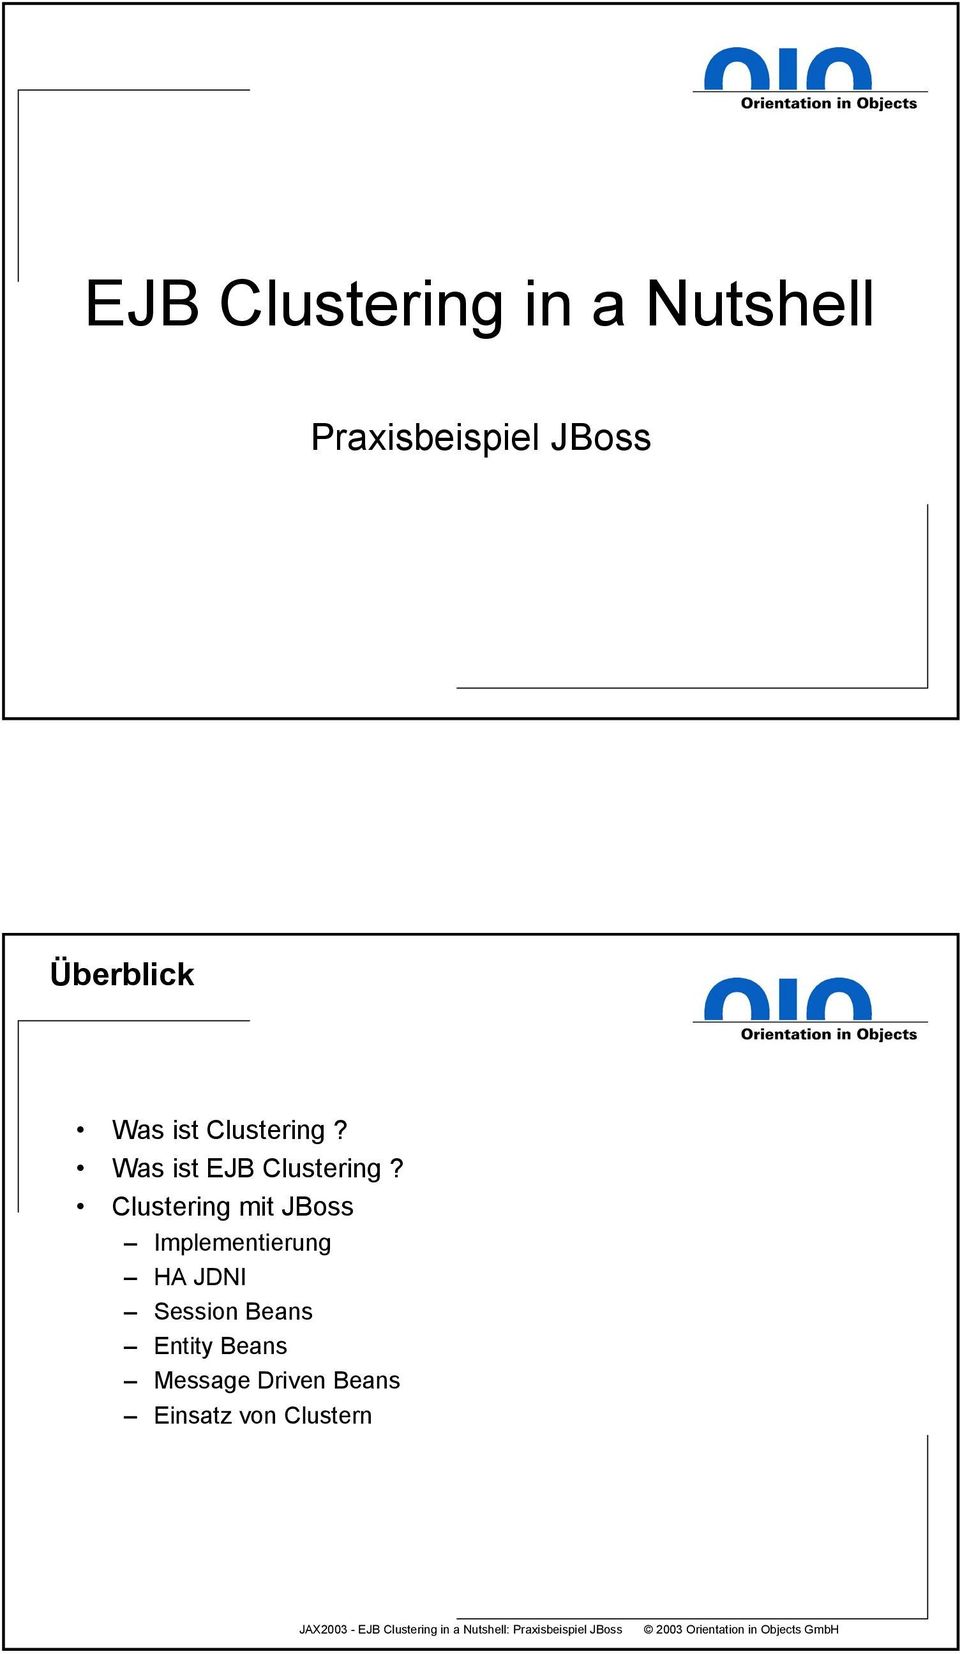 Clustering mit JBoss Implementierung HA JDNI Session